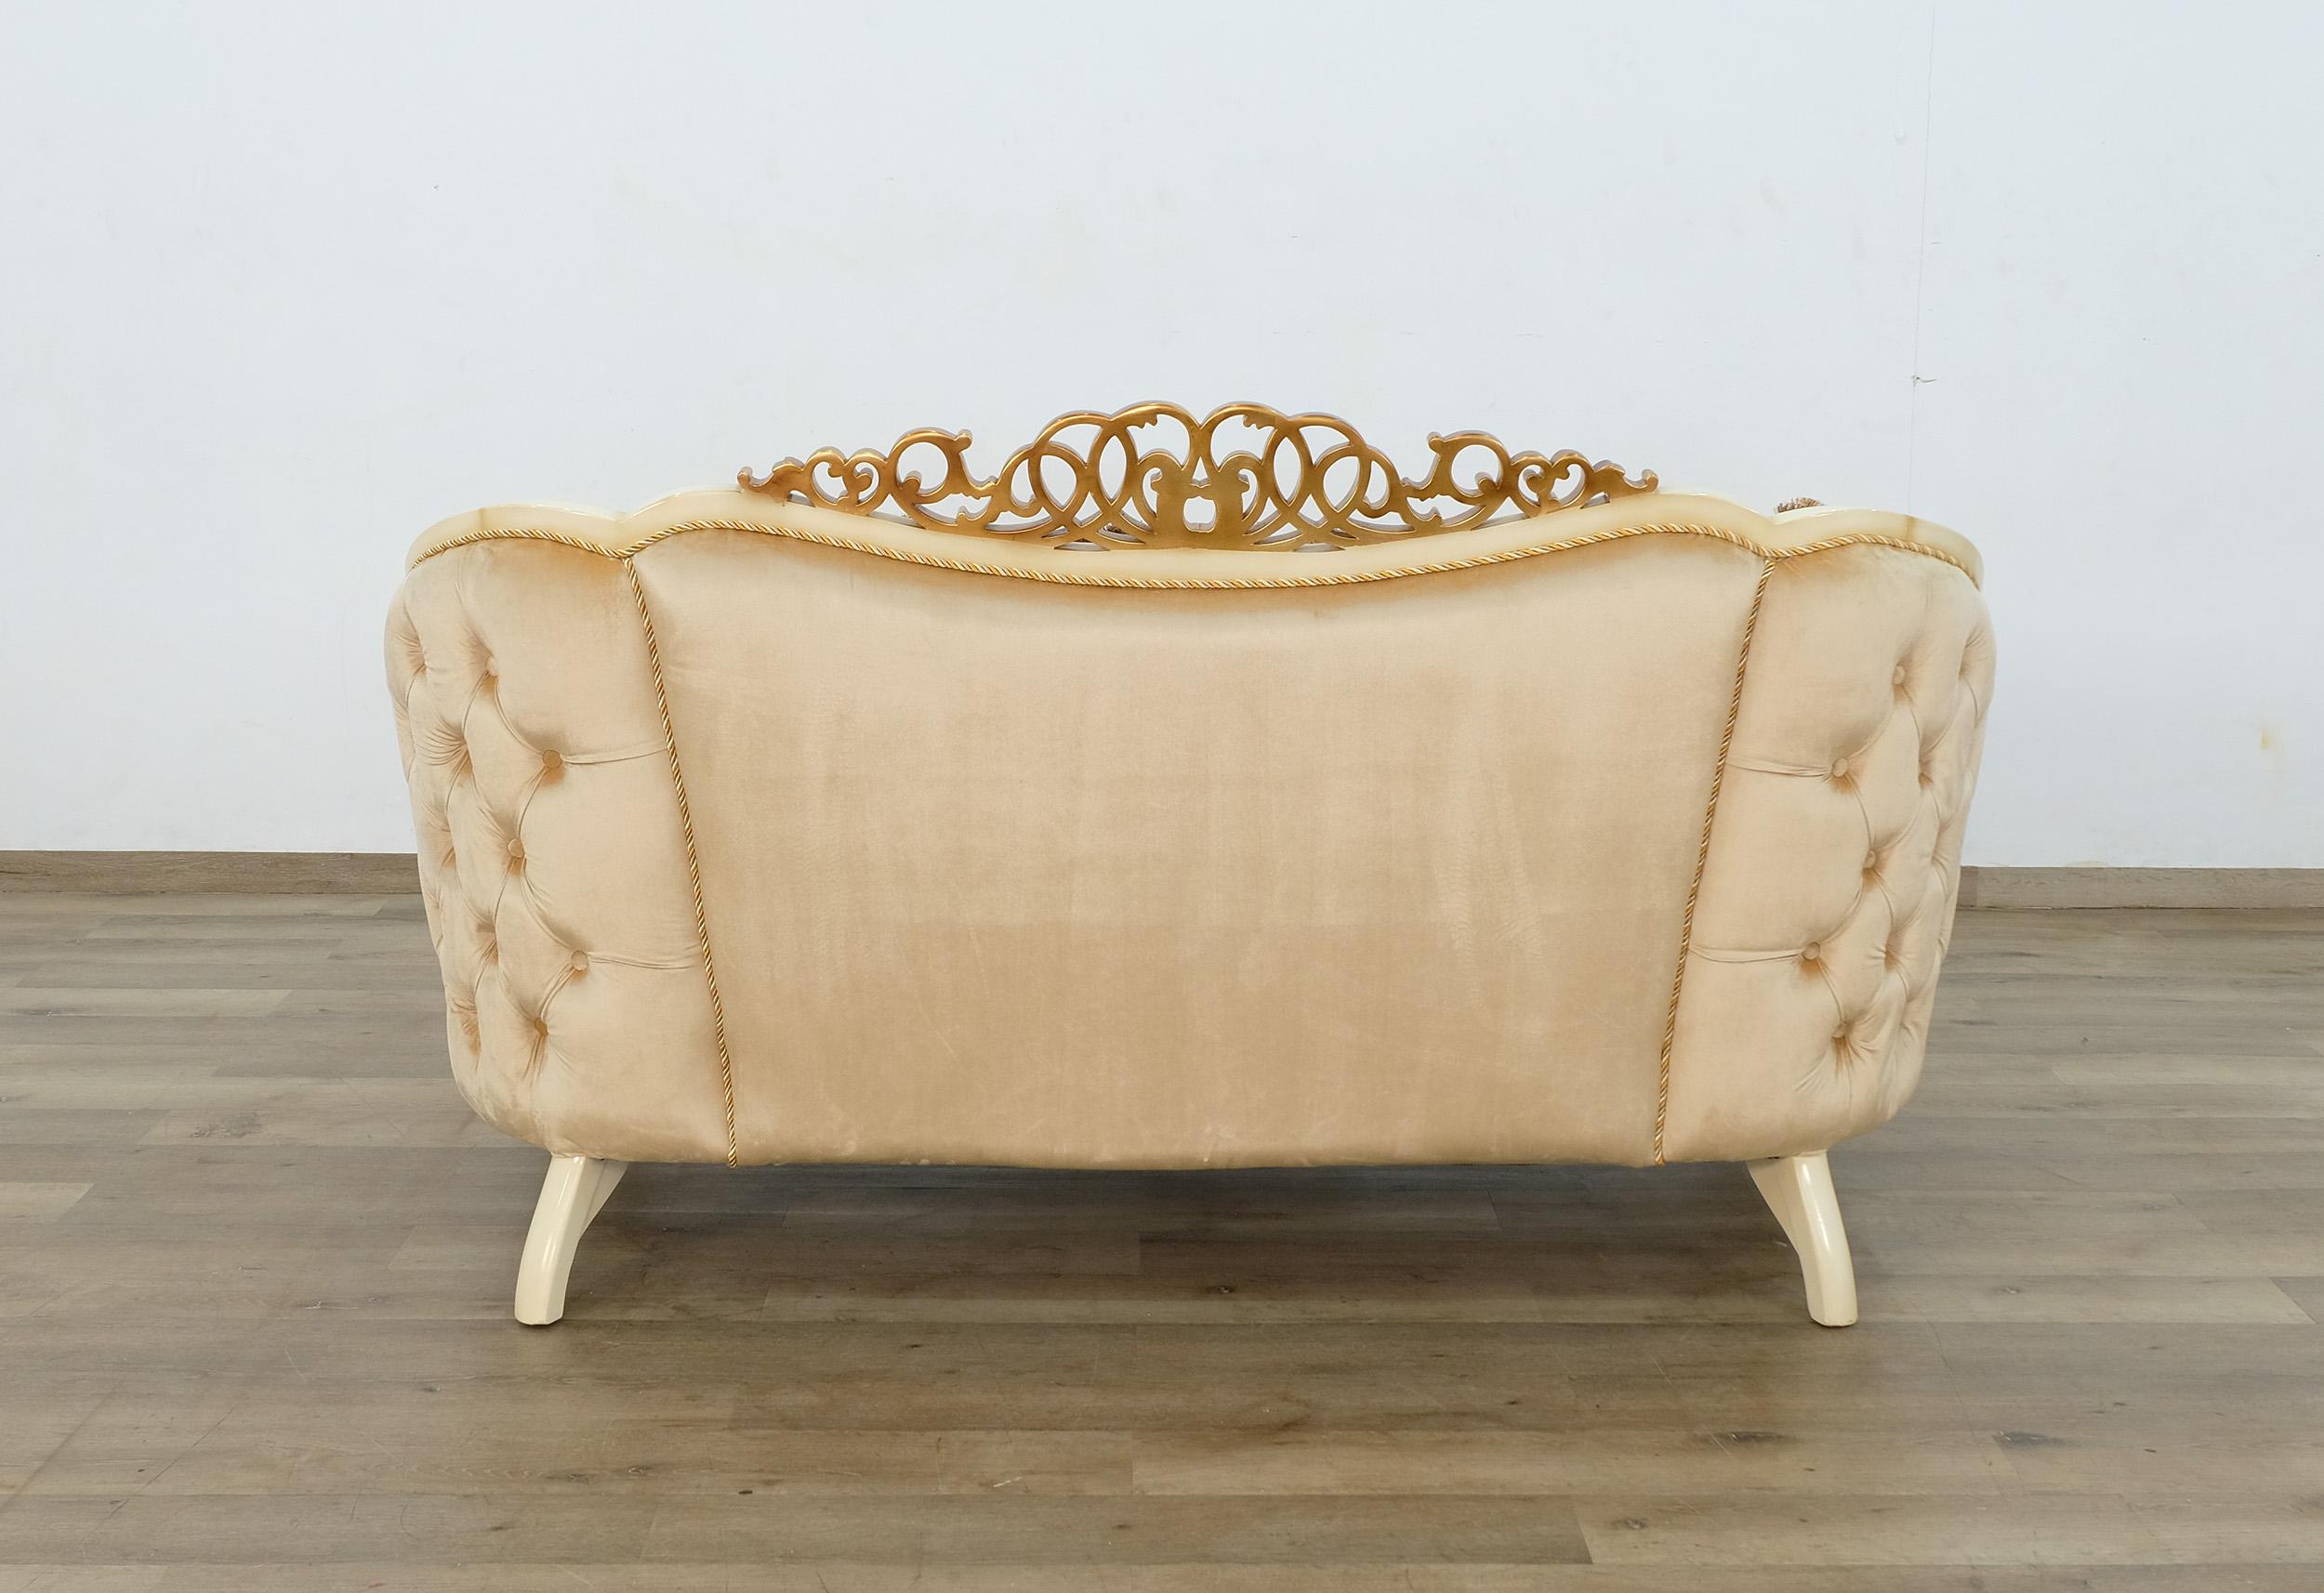 

    
Luxury Beige Antique Dark Gold Wood Trim ANGELICA Sofa Set 4 Pcs EUROPEAN FURNITURE
